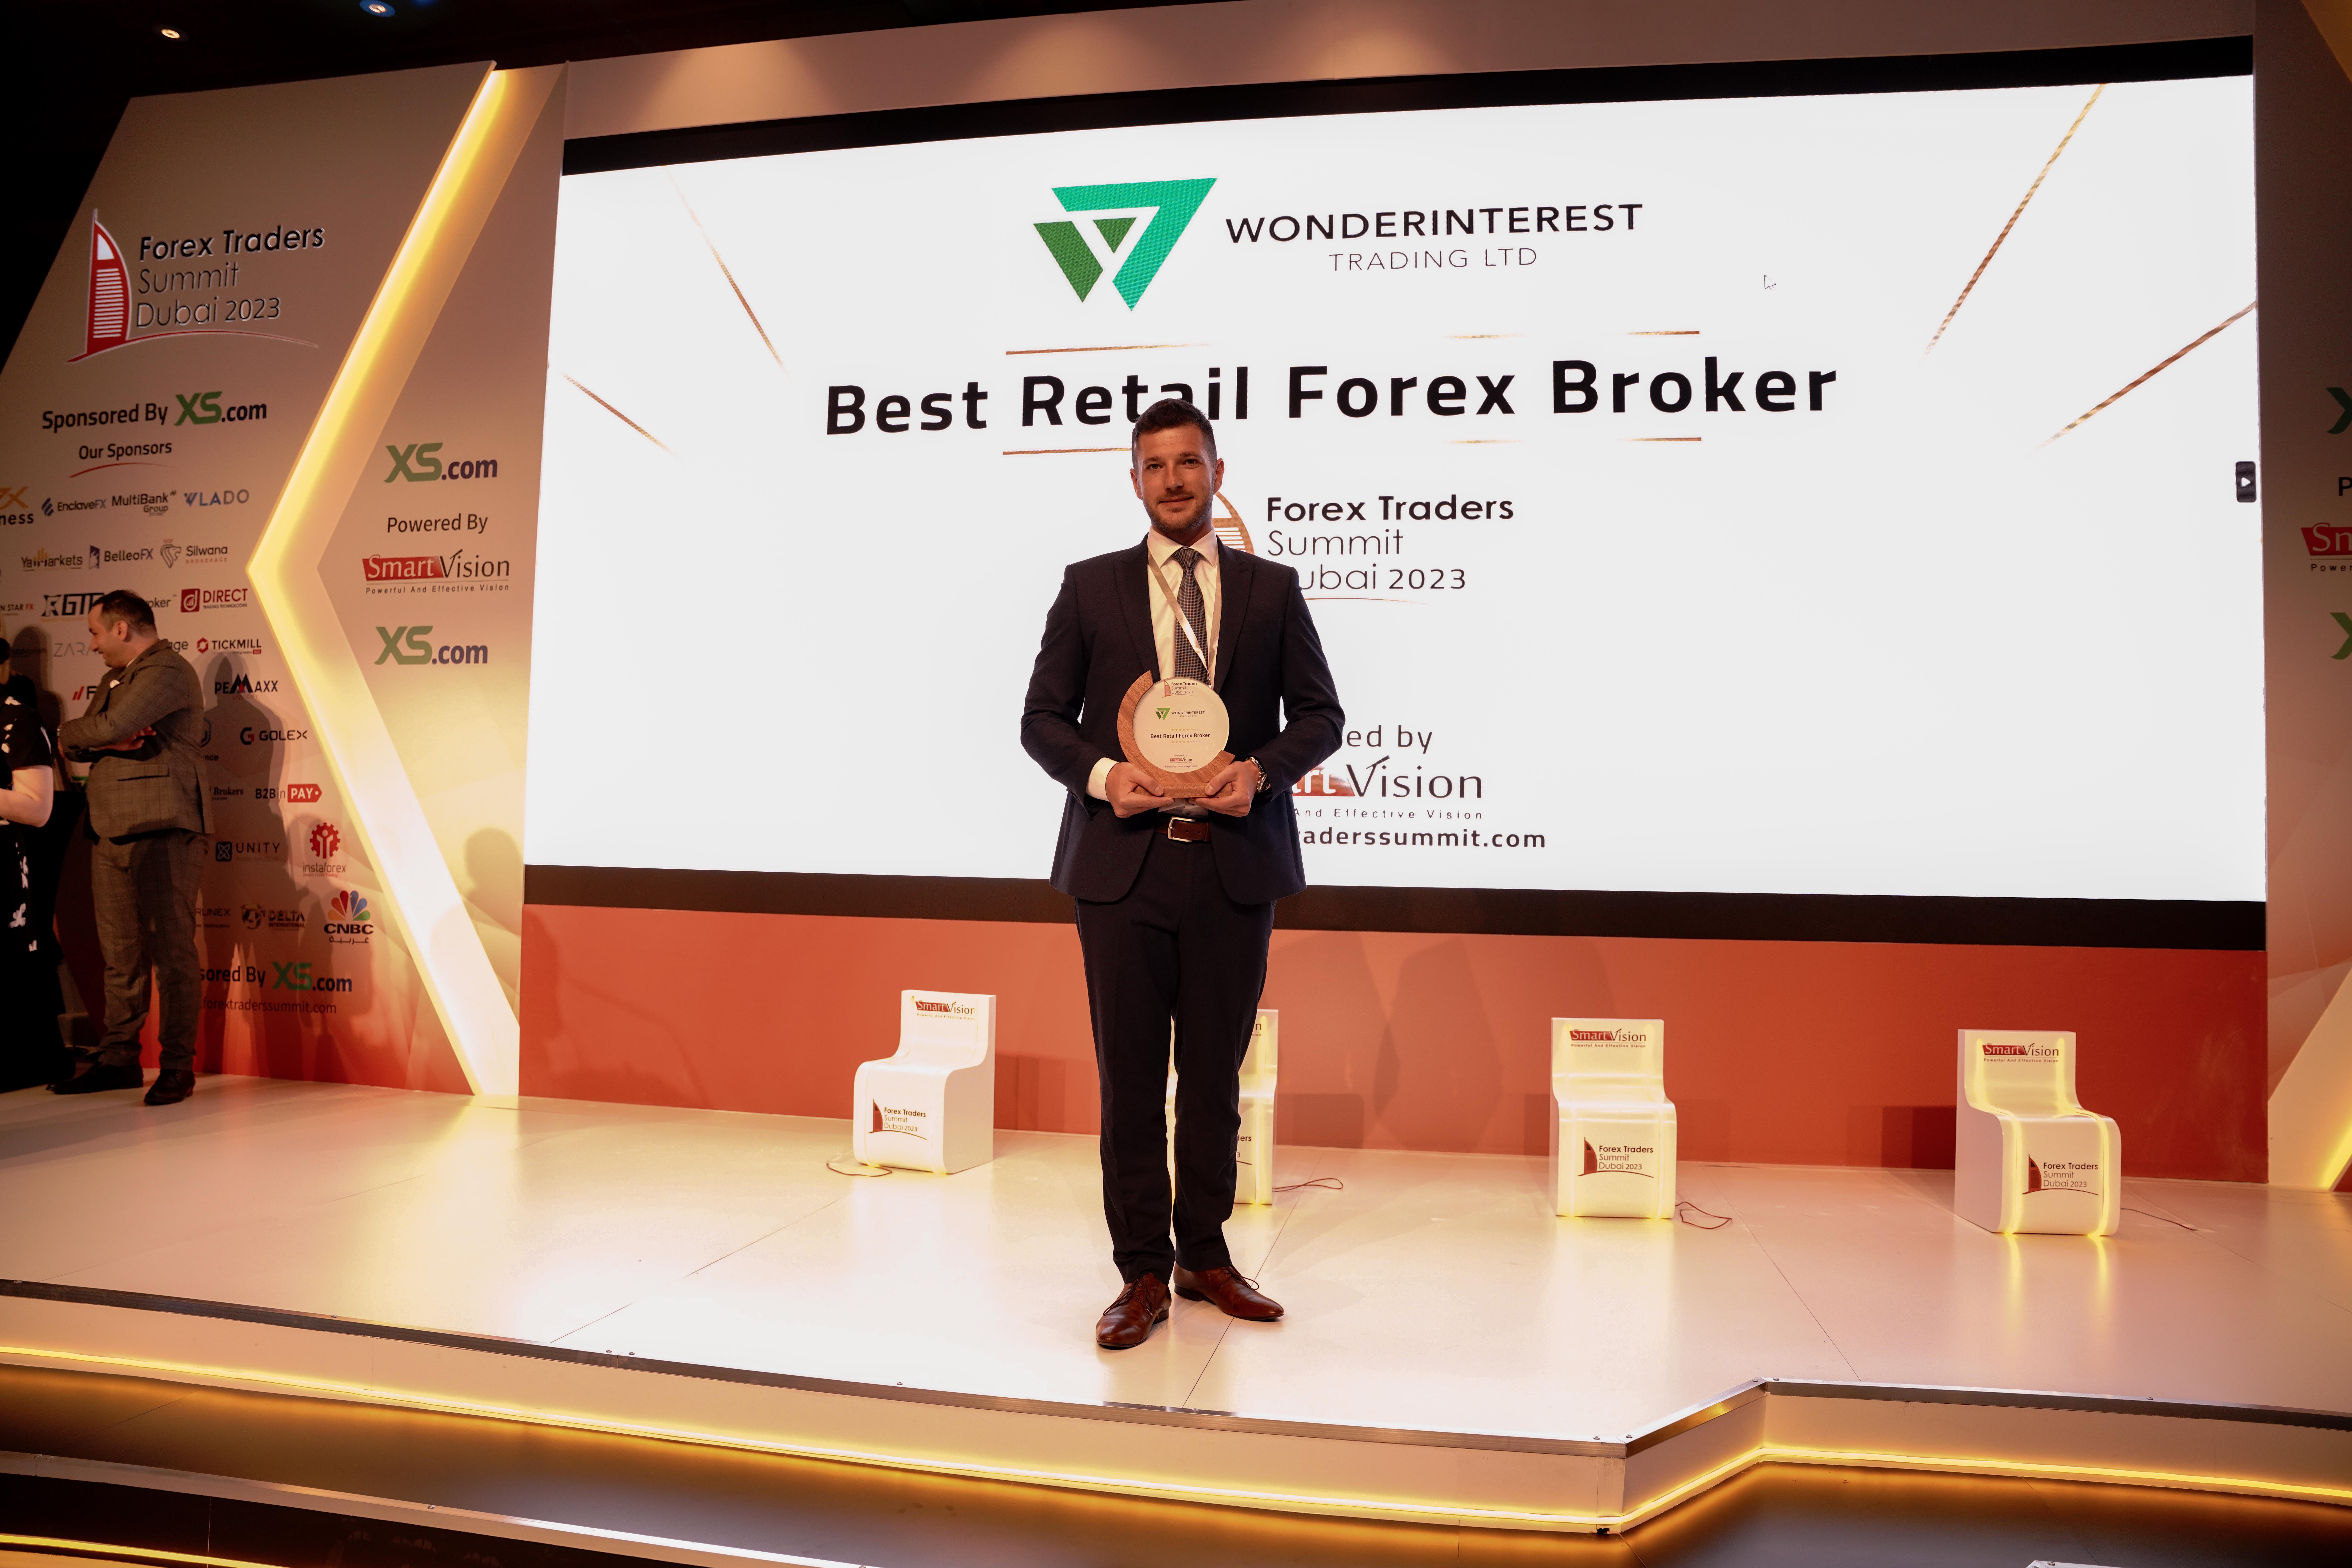 Wonderinterest | Η Wonderinterest Trading Ltd. βραβεύτηκε ως ο καλύτερος μεσίτης λιανικής Forex στο Forex Trader Summit στο Ντουμπάι 2023